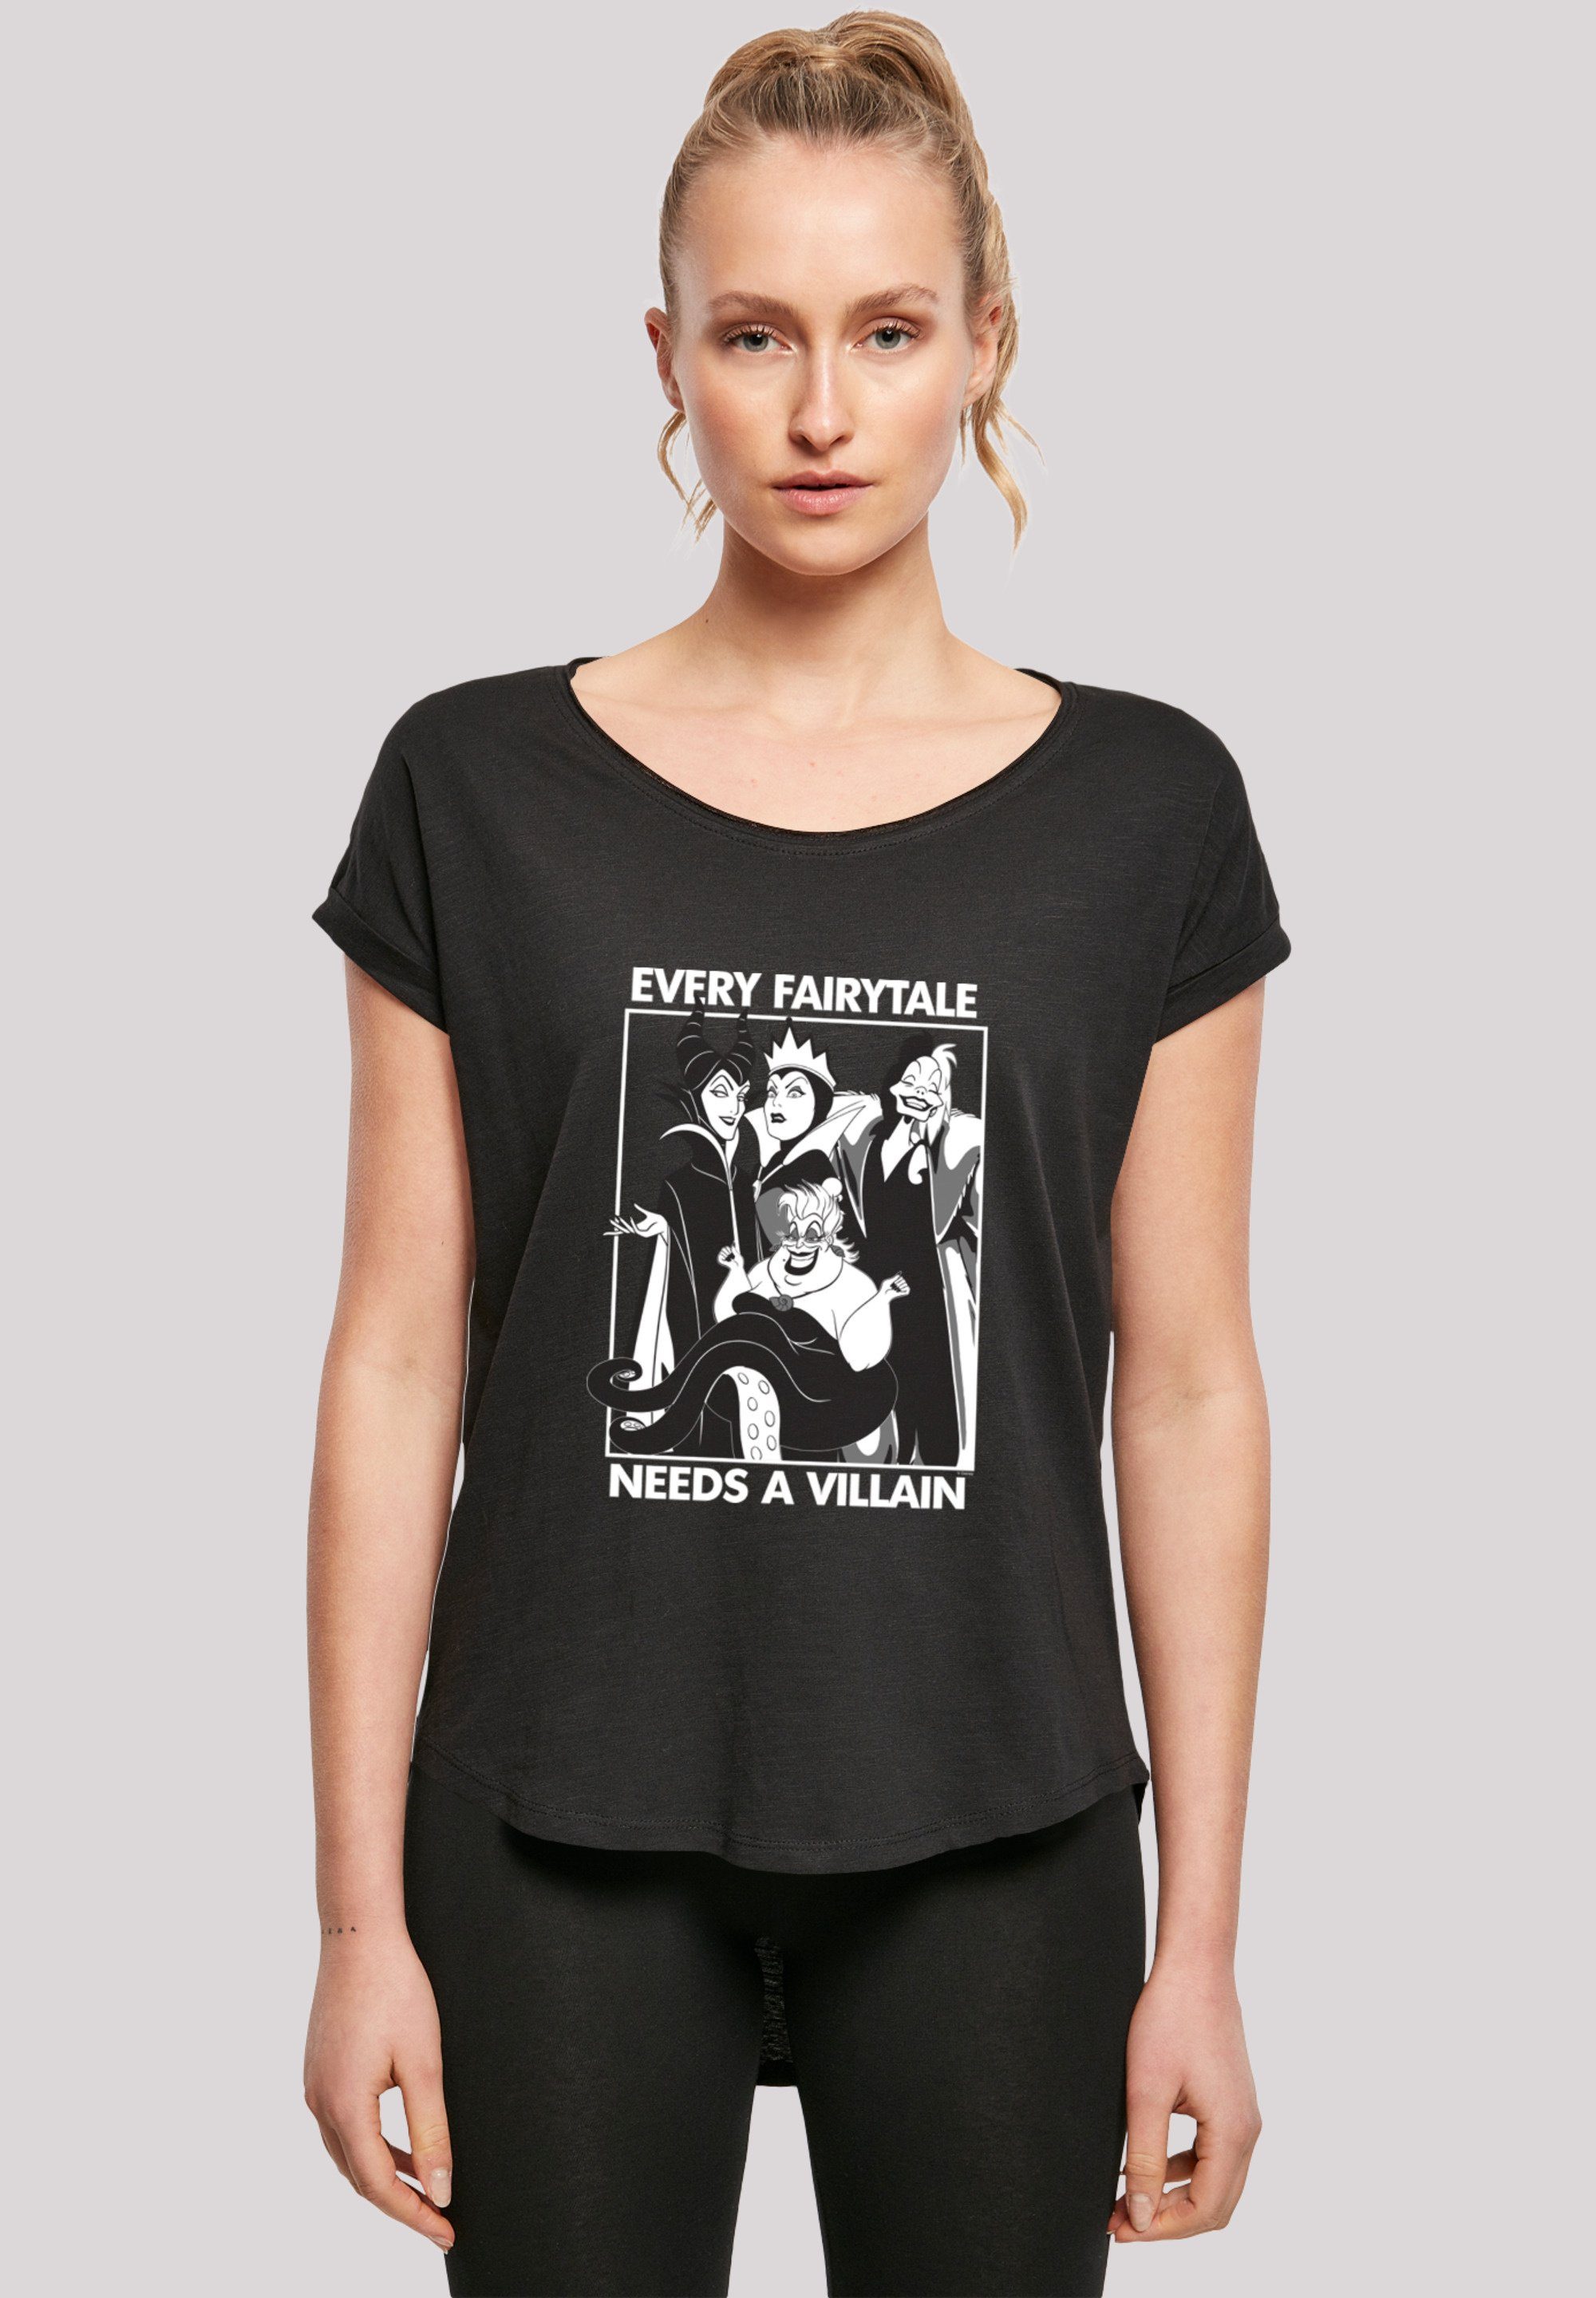 Fairy Villain Print Tale Every A F4NT4STIC T-Shirt Needs